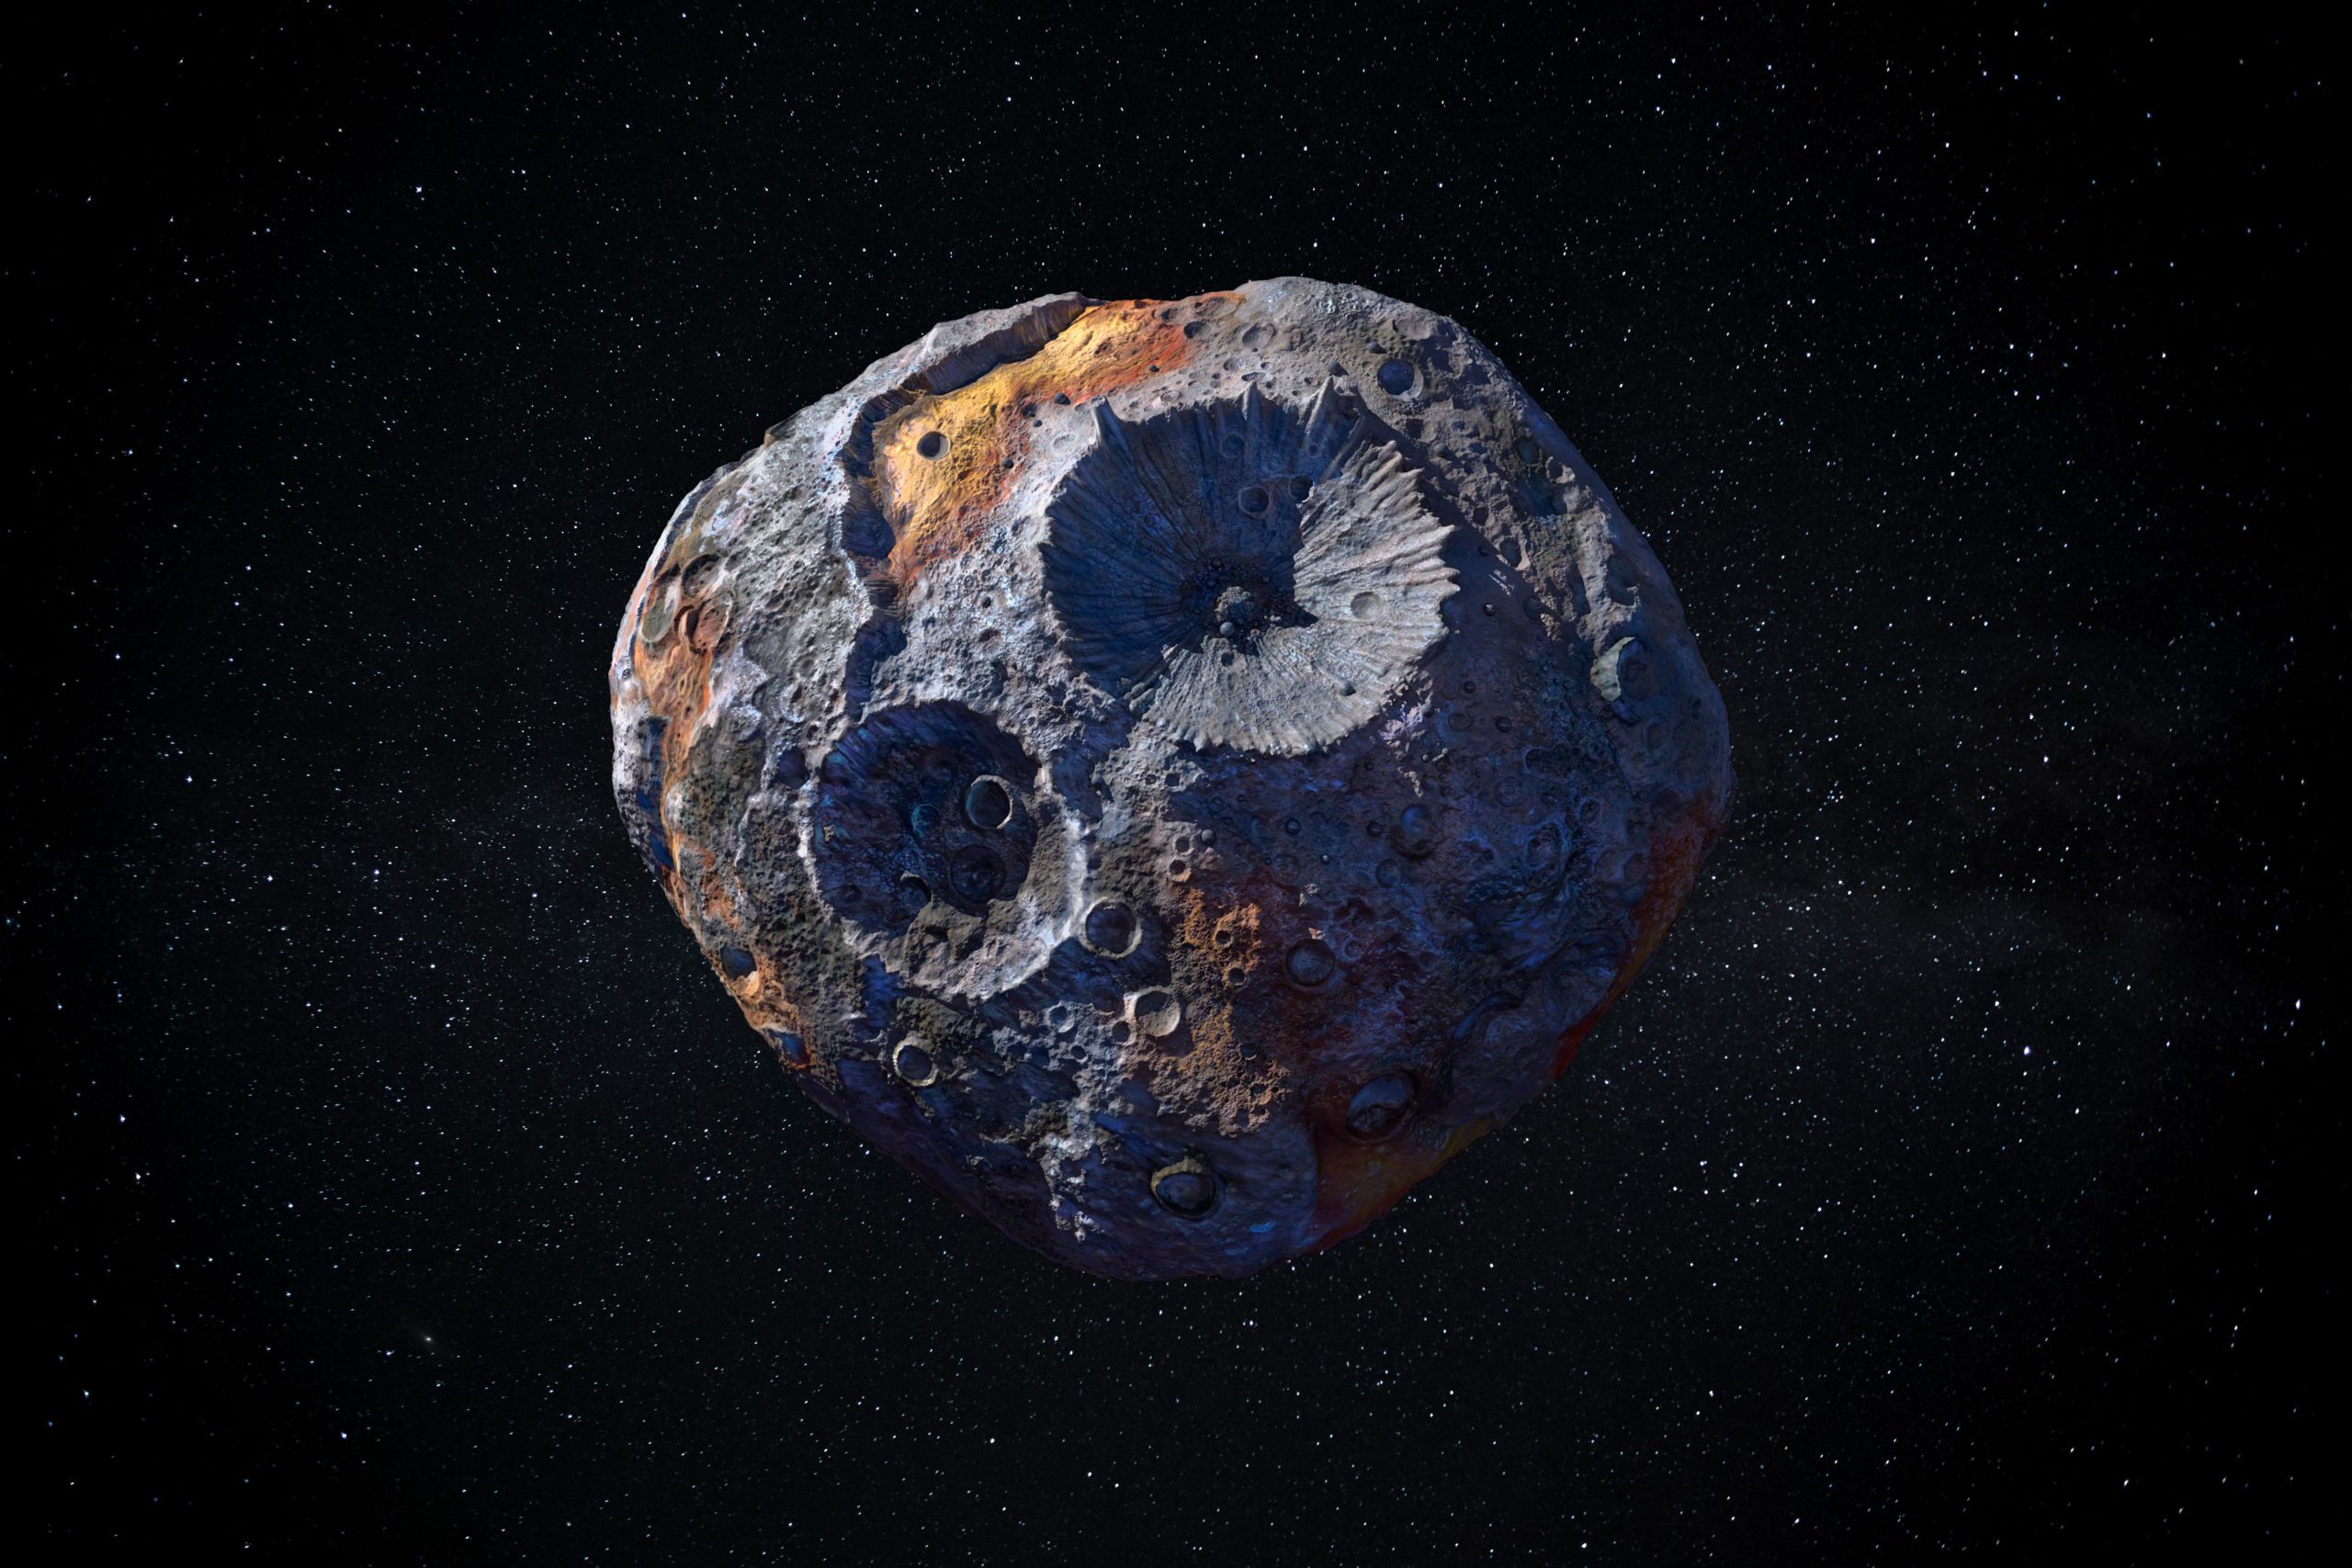 An asteroid